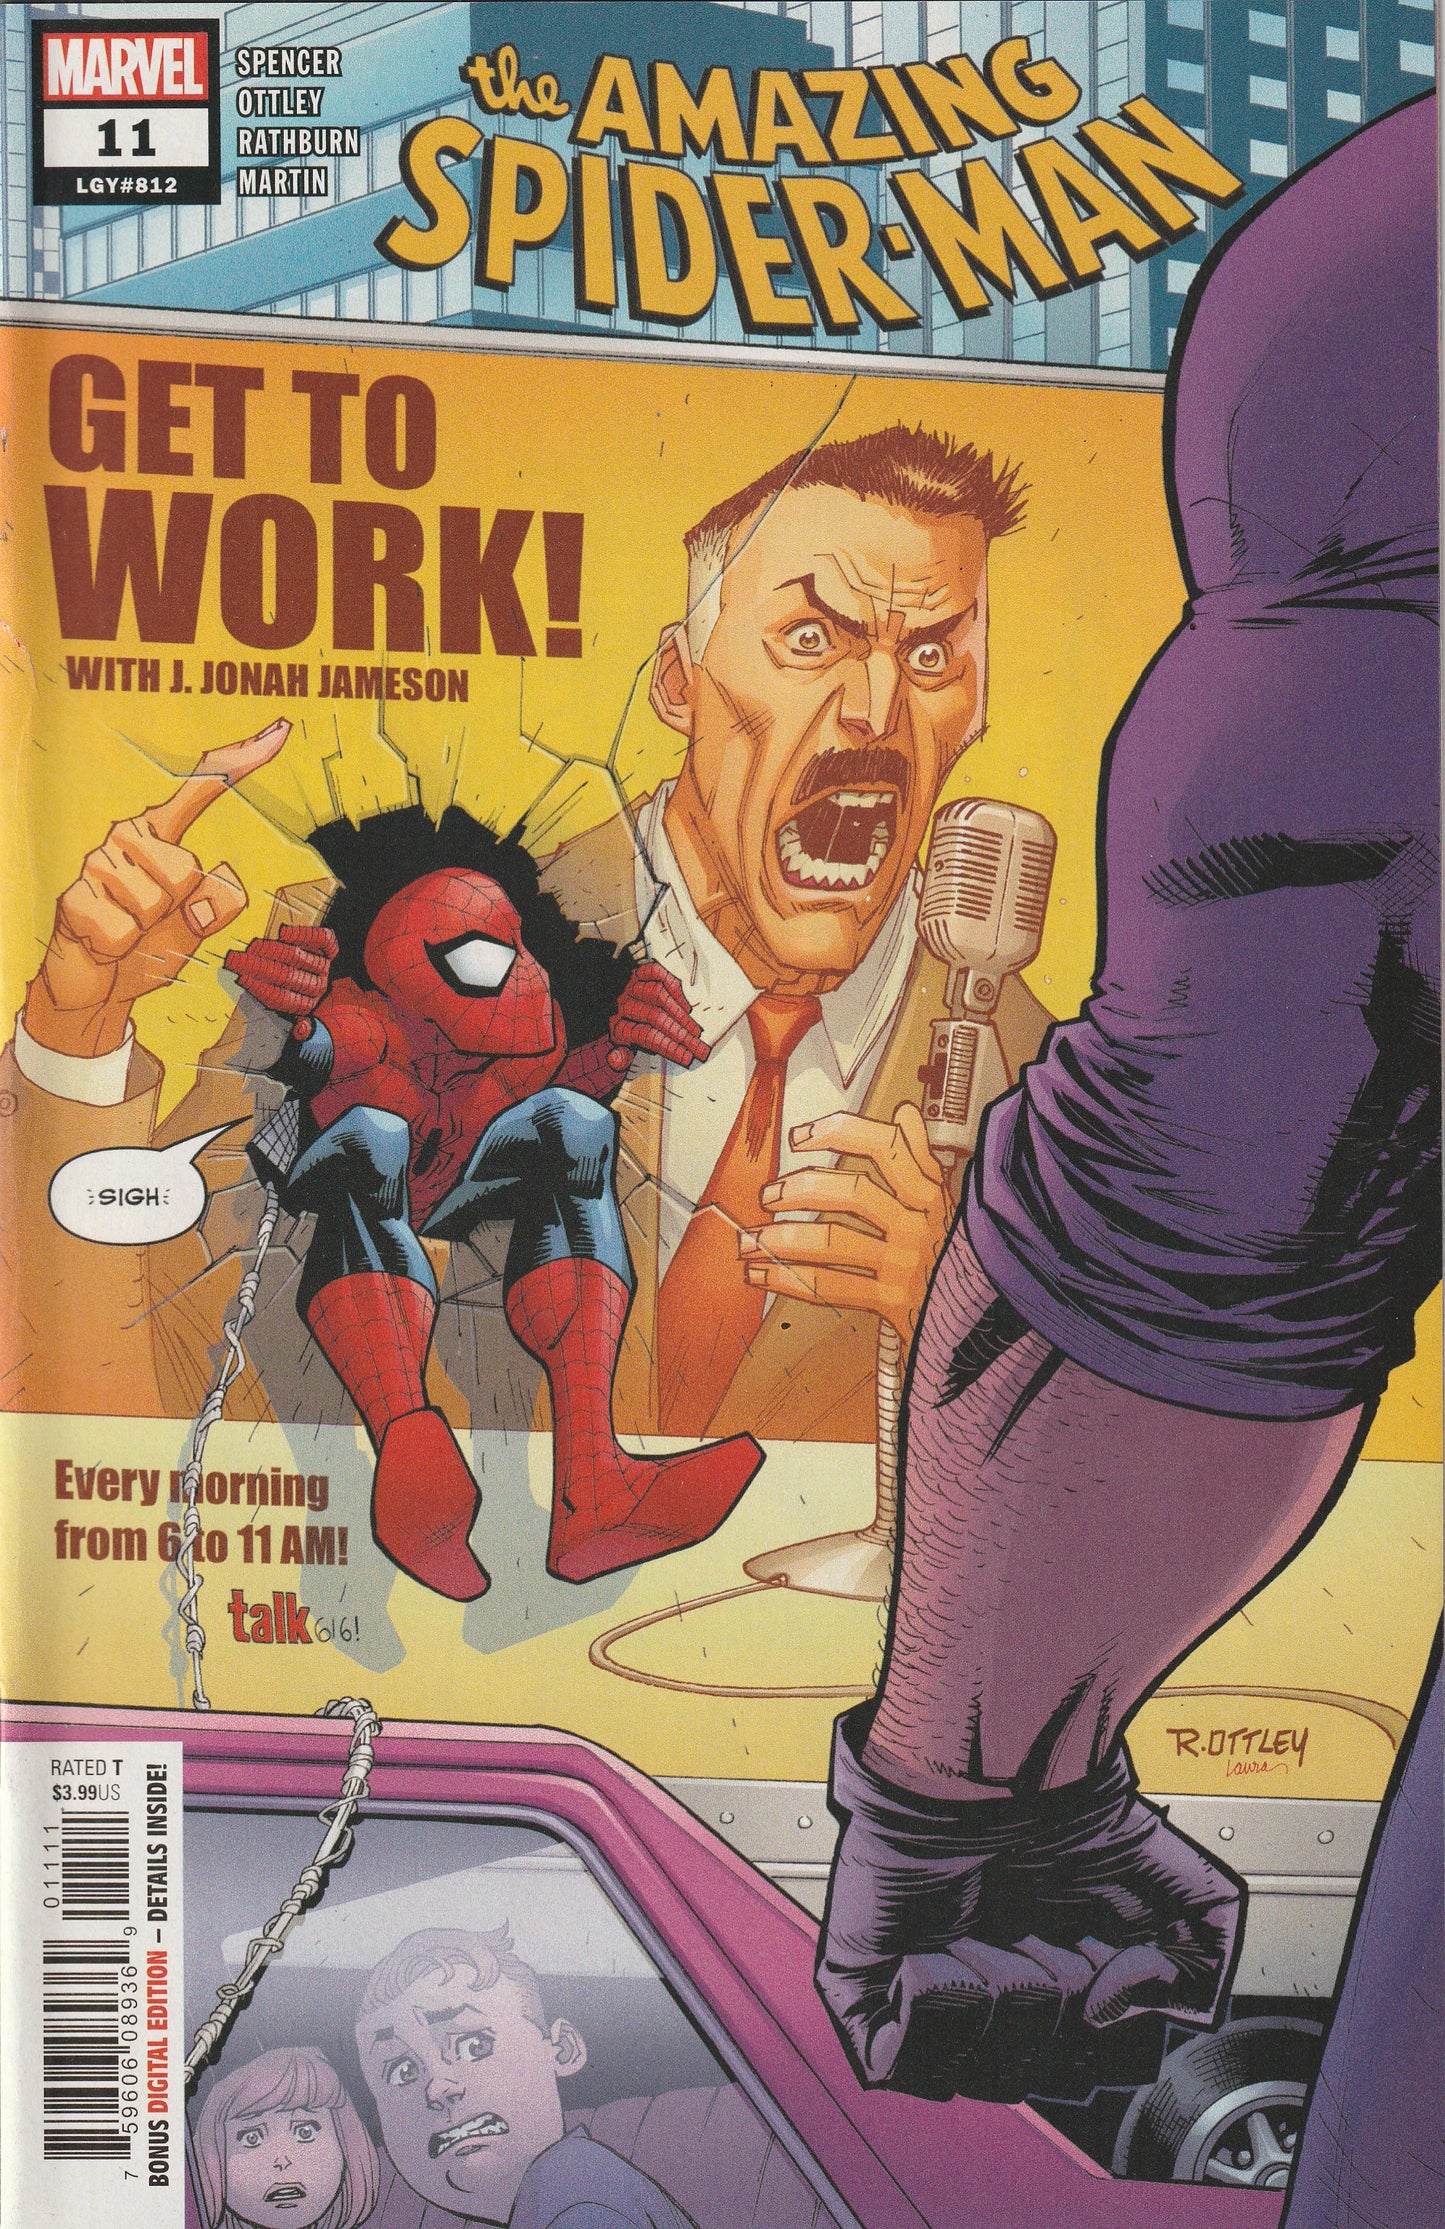 Amazing Spider-Man #11 (LGY #812) (Vol 6, 2019)